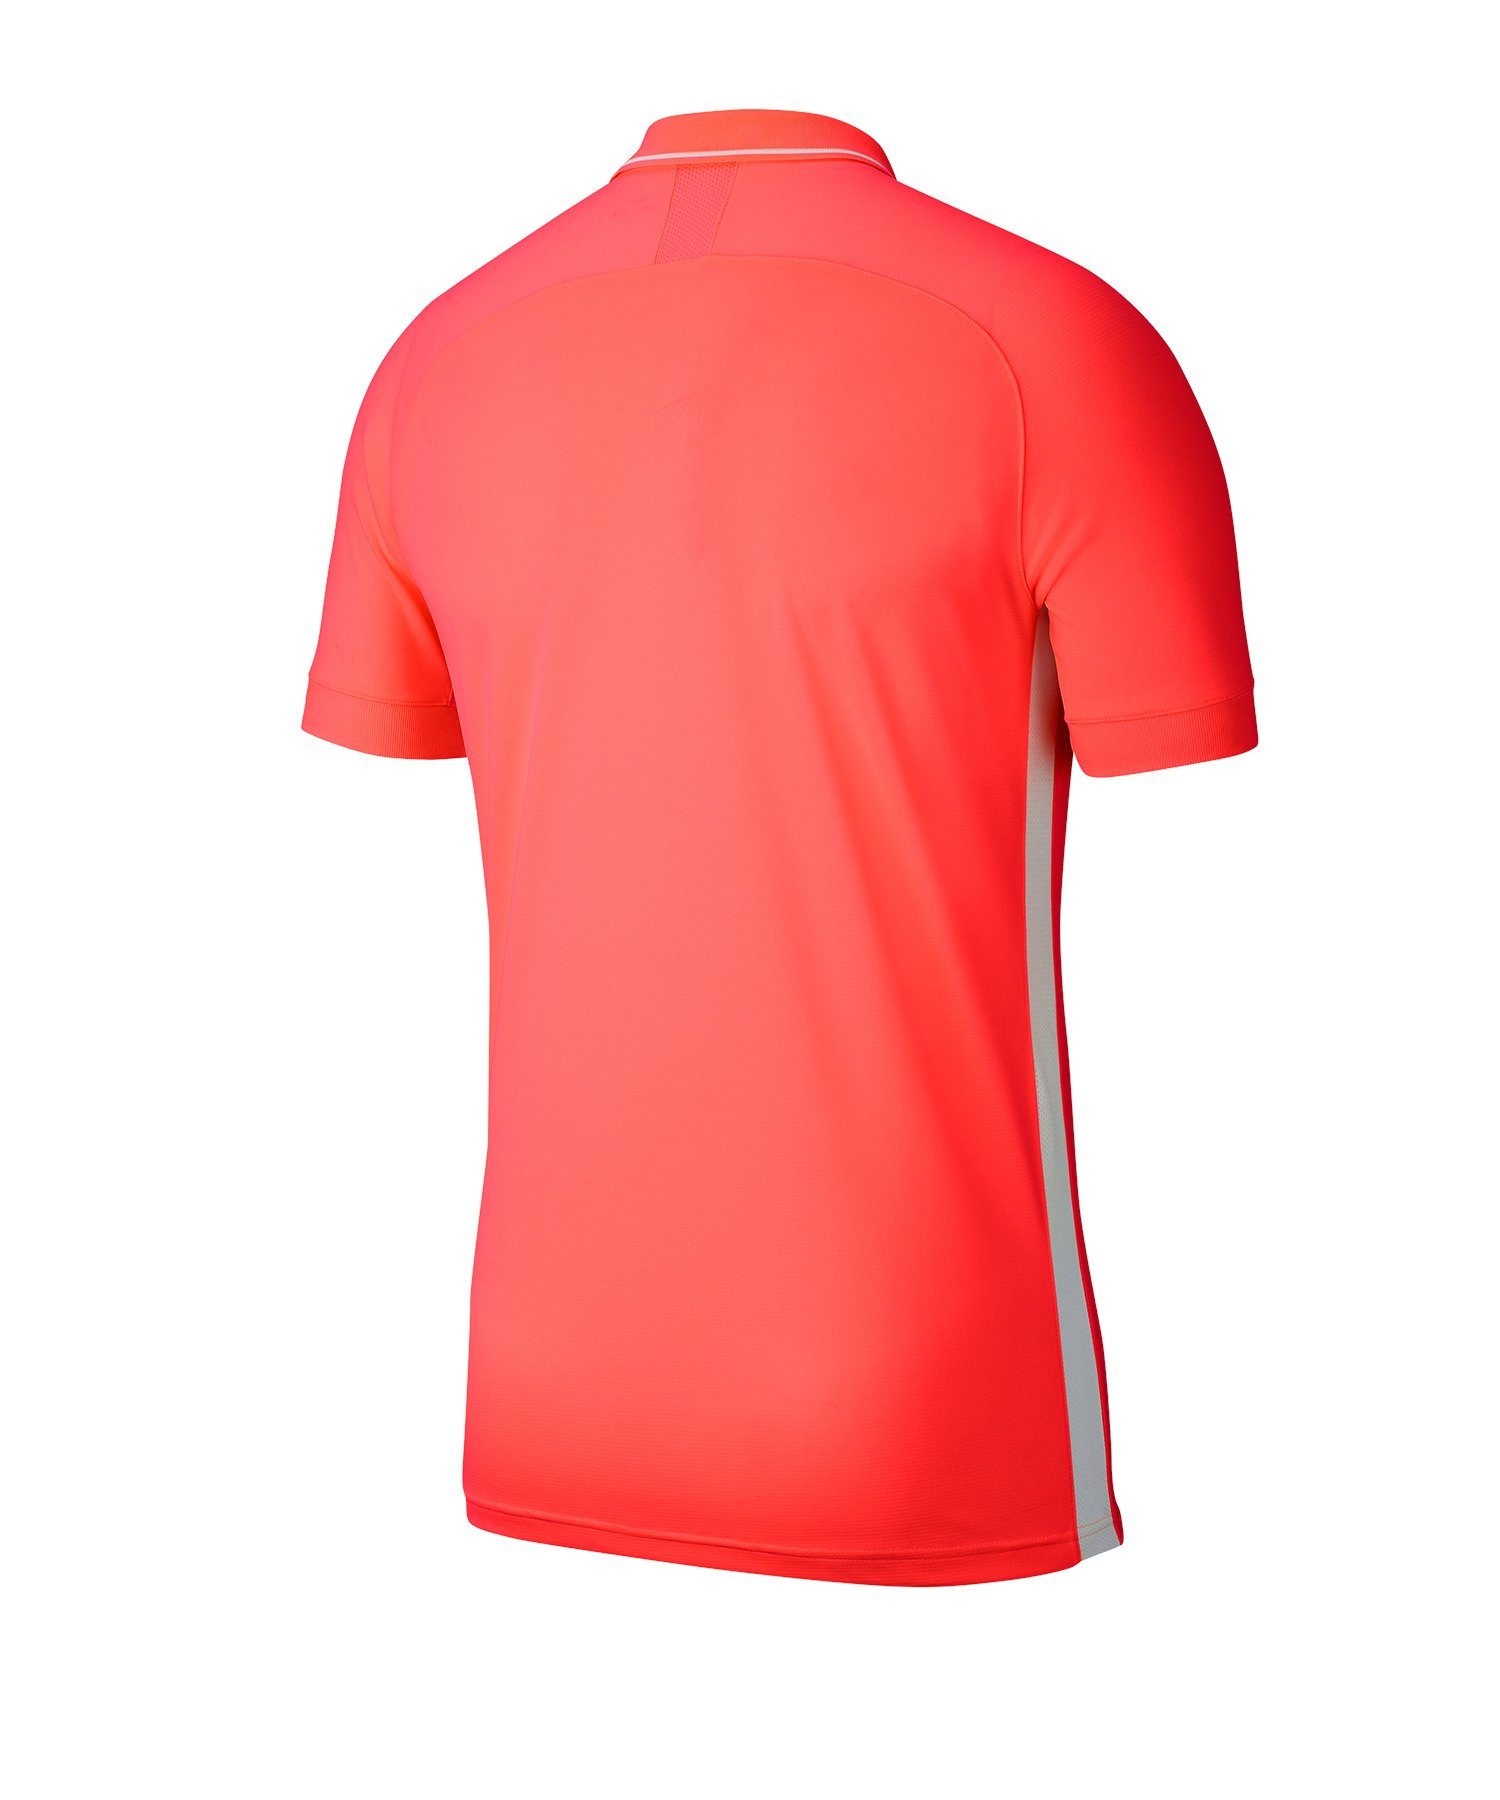 Academy Nike T-Shirt rot Poloshirt default 19